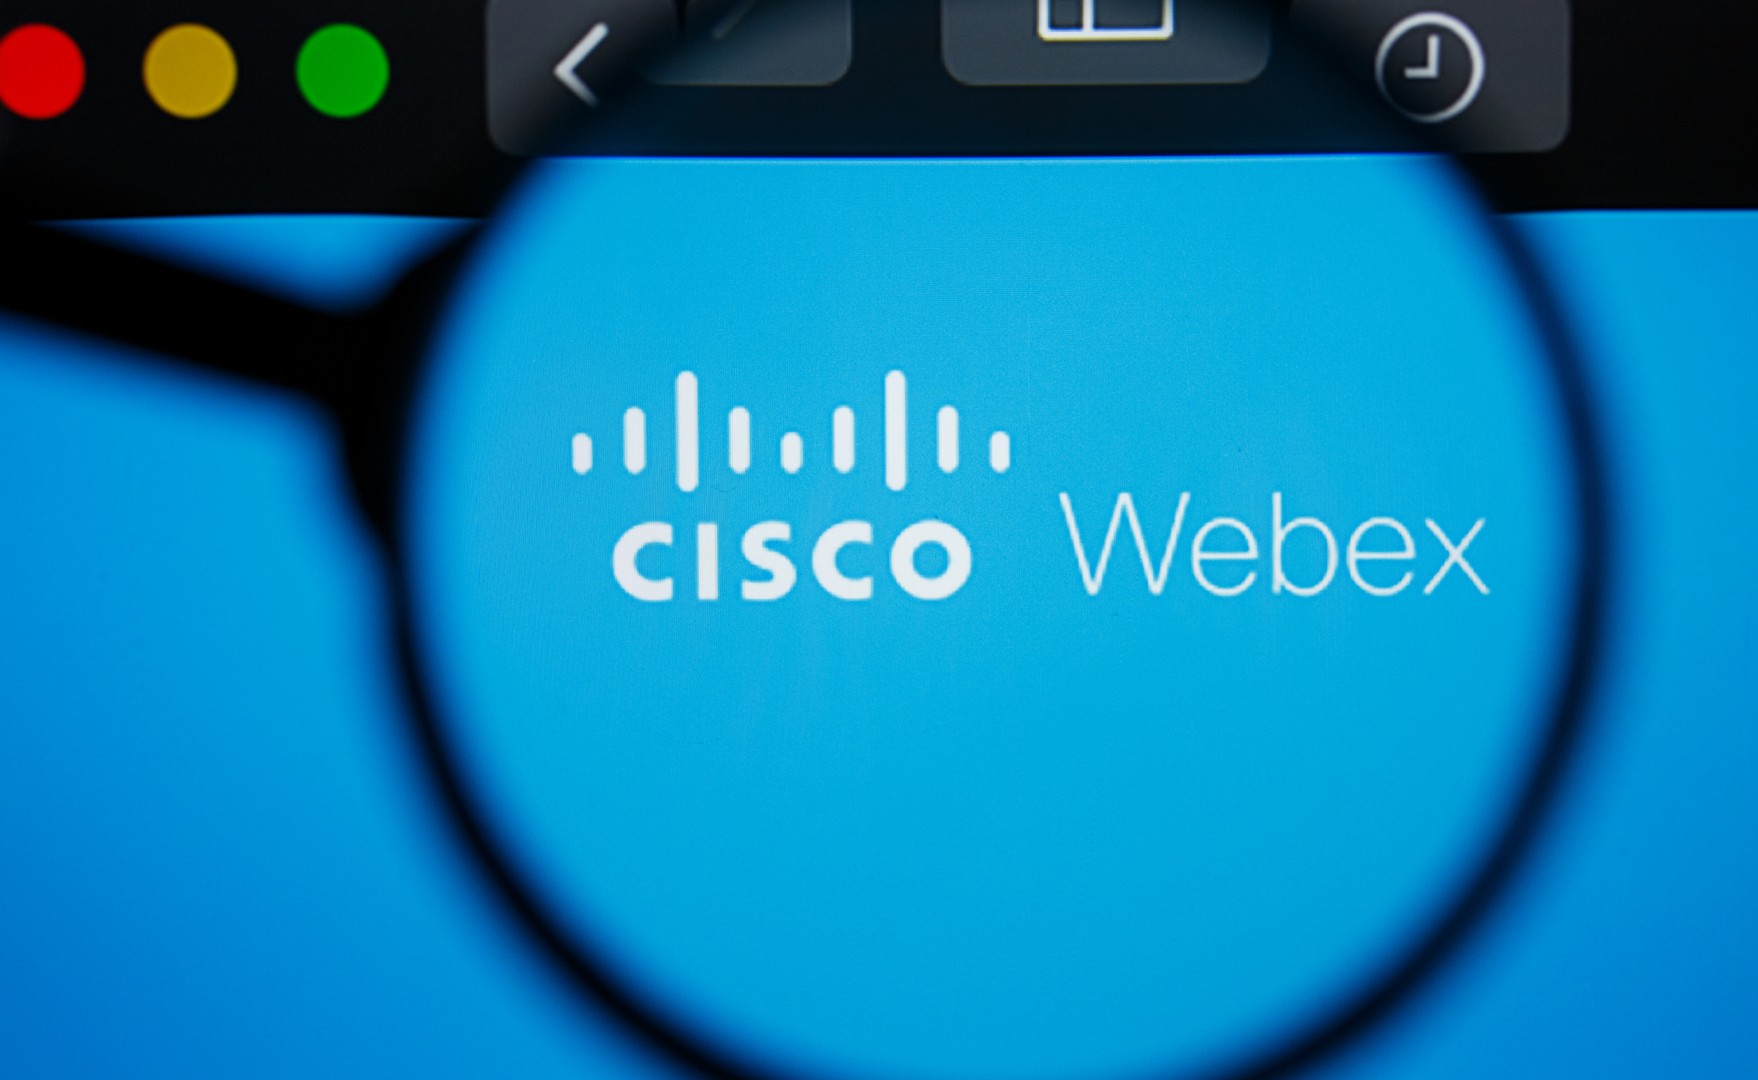  e-Μαθήματα: Επισημάνσεις της Ένωσης Πληροφορικών για τη σύμβαση Cisco-Webex με το Υπουργείο Παιδείας